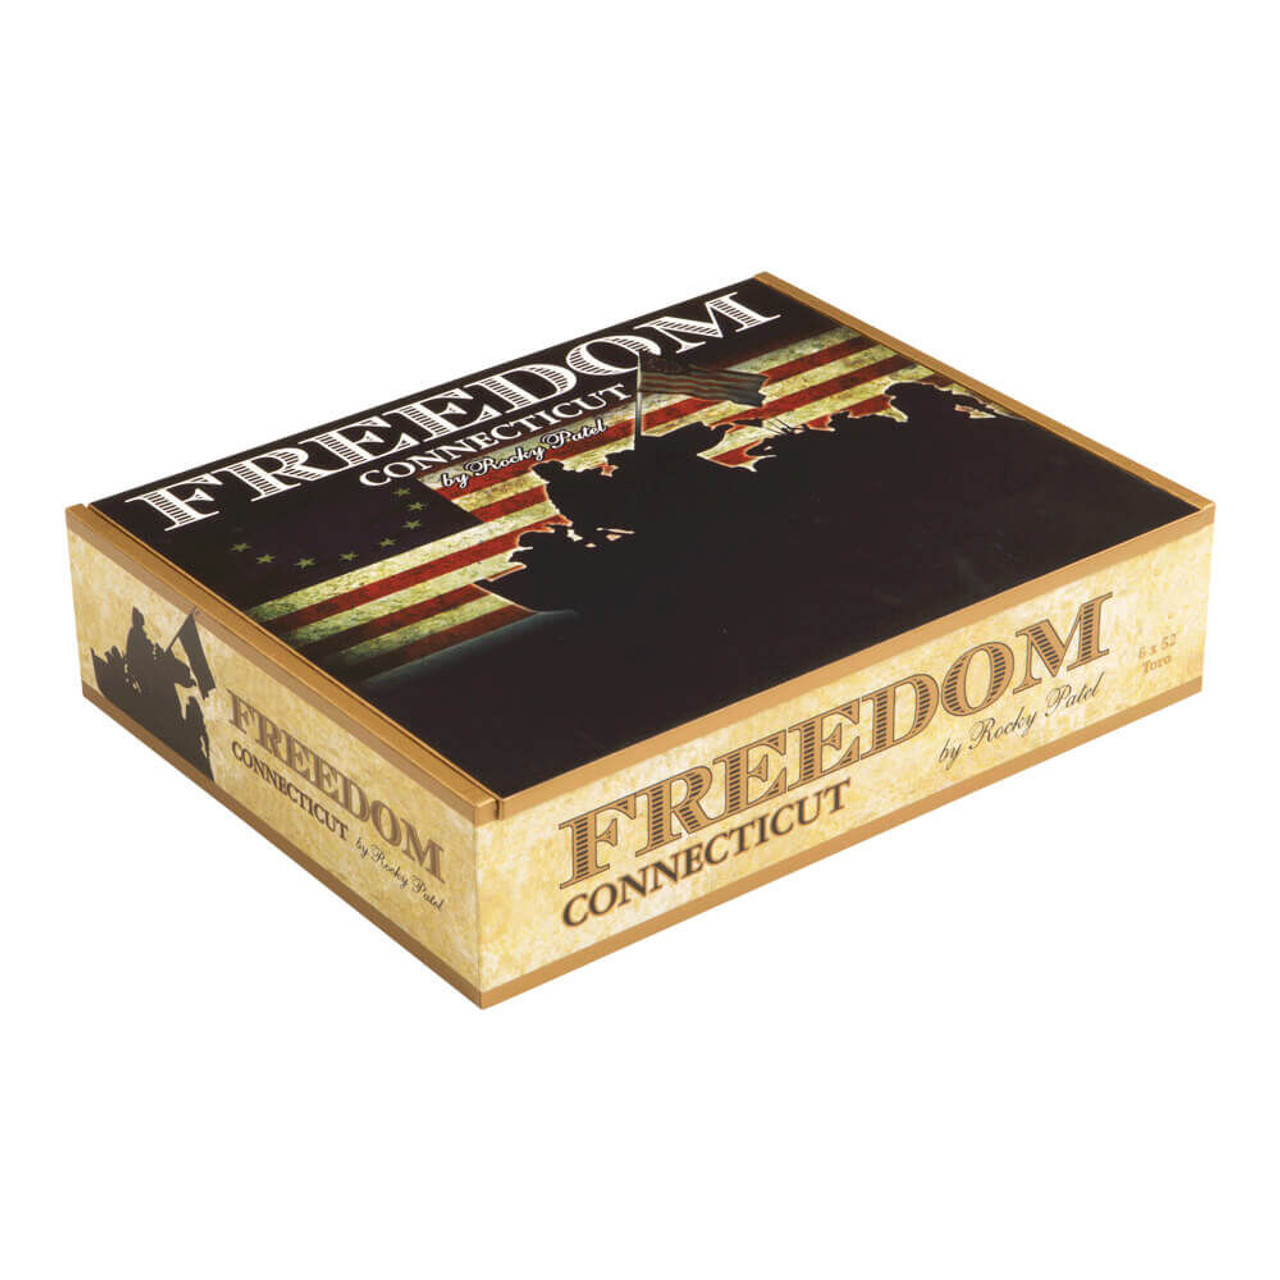 Rocky Patel Freedom Connecticut Toro Cigars - 6 x 52 (Box of 20) *Box